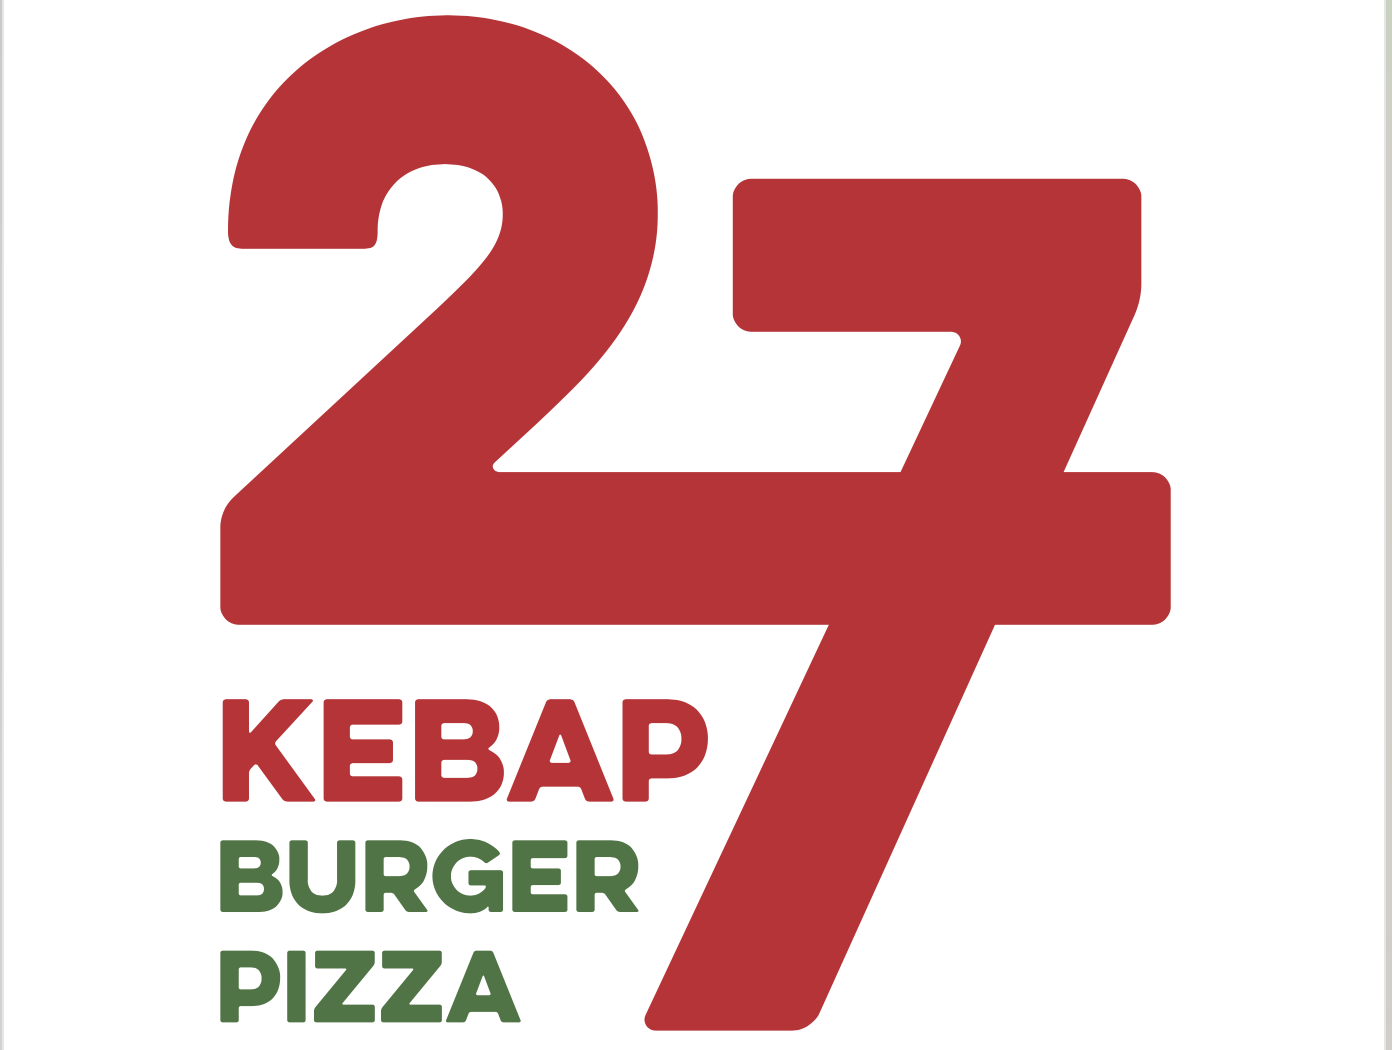 Kebap 27 Pizza Burger